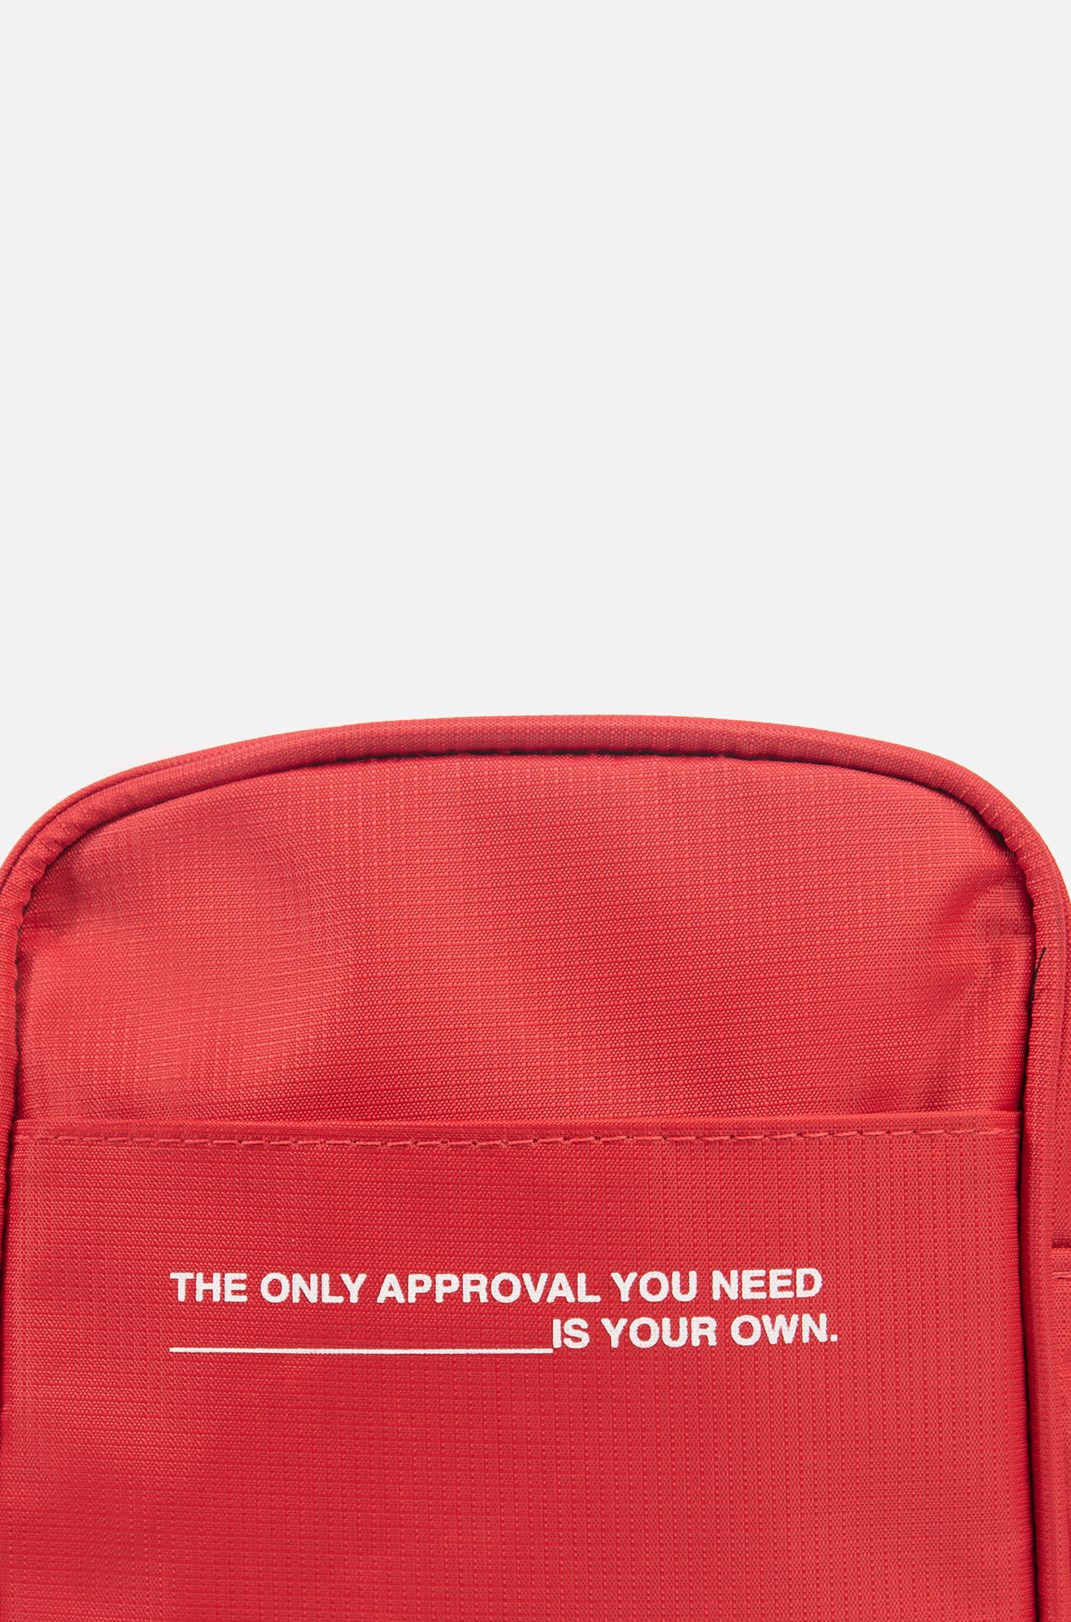 Shoulder Bag Approve Vermelha